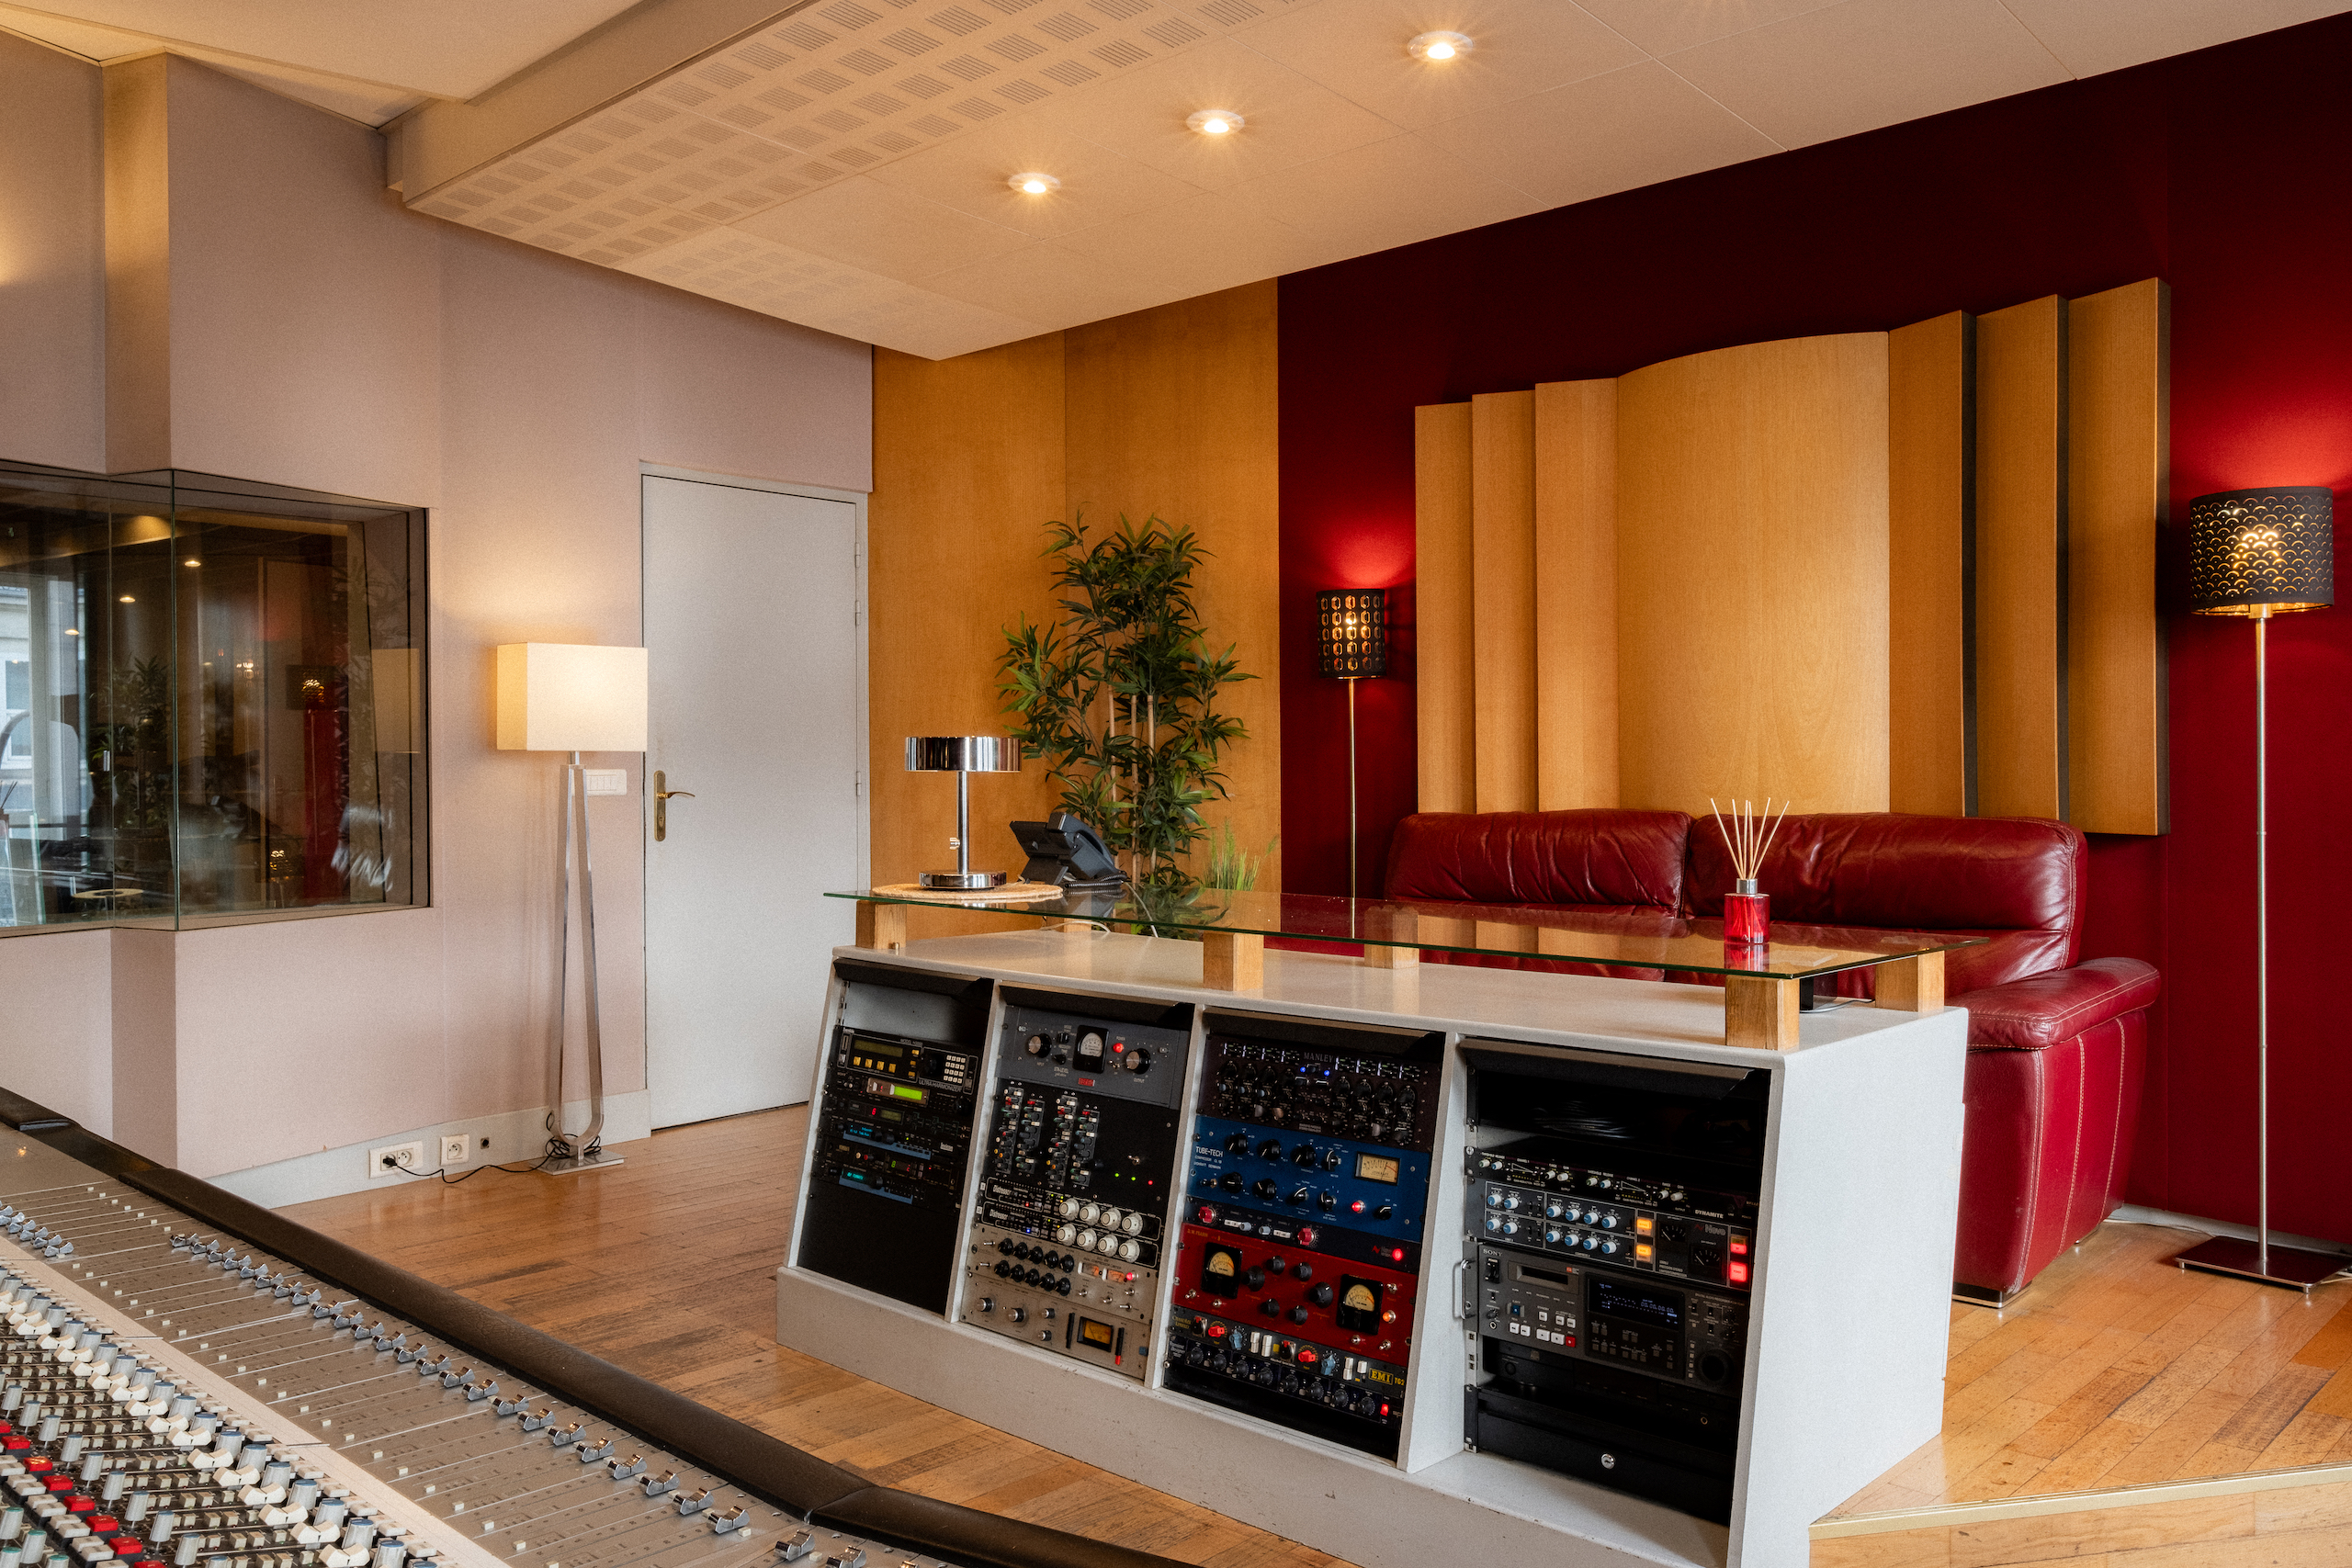 Accueil Studio NovaSon - Studio d'enregistrement près de NIMES